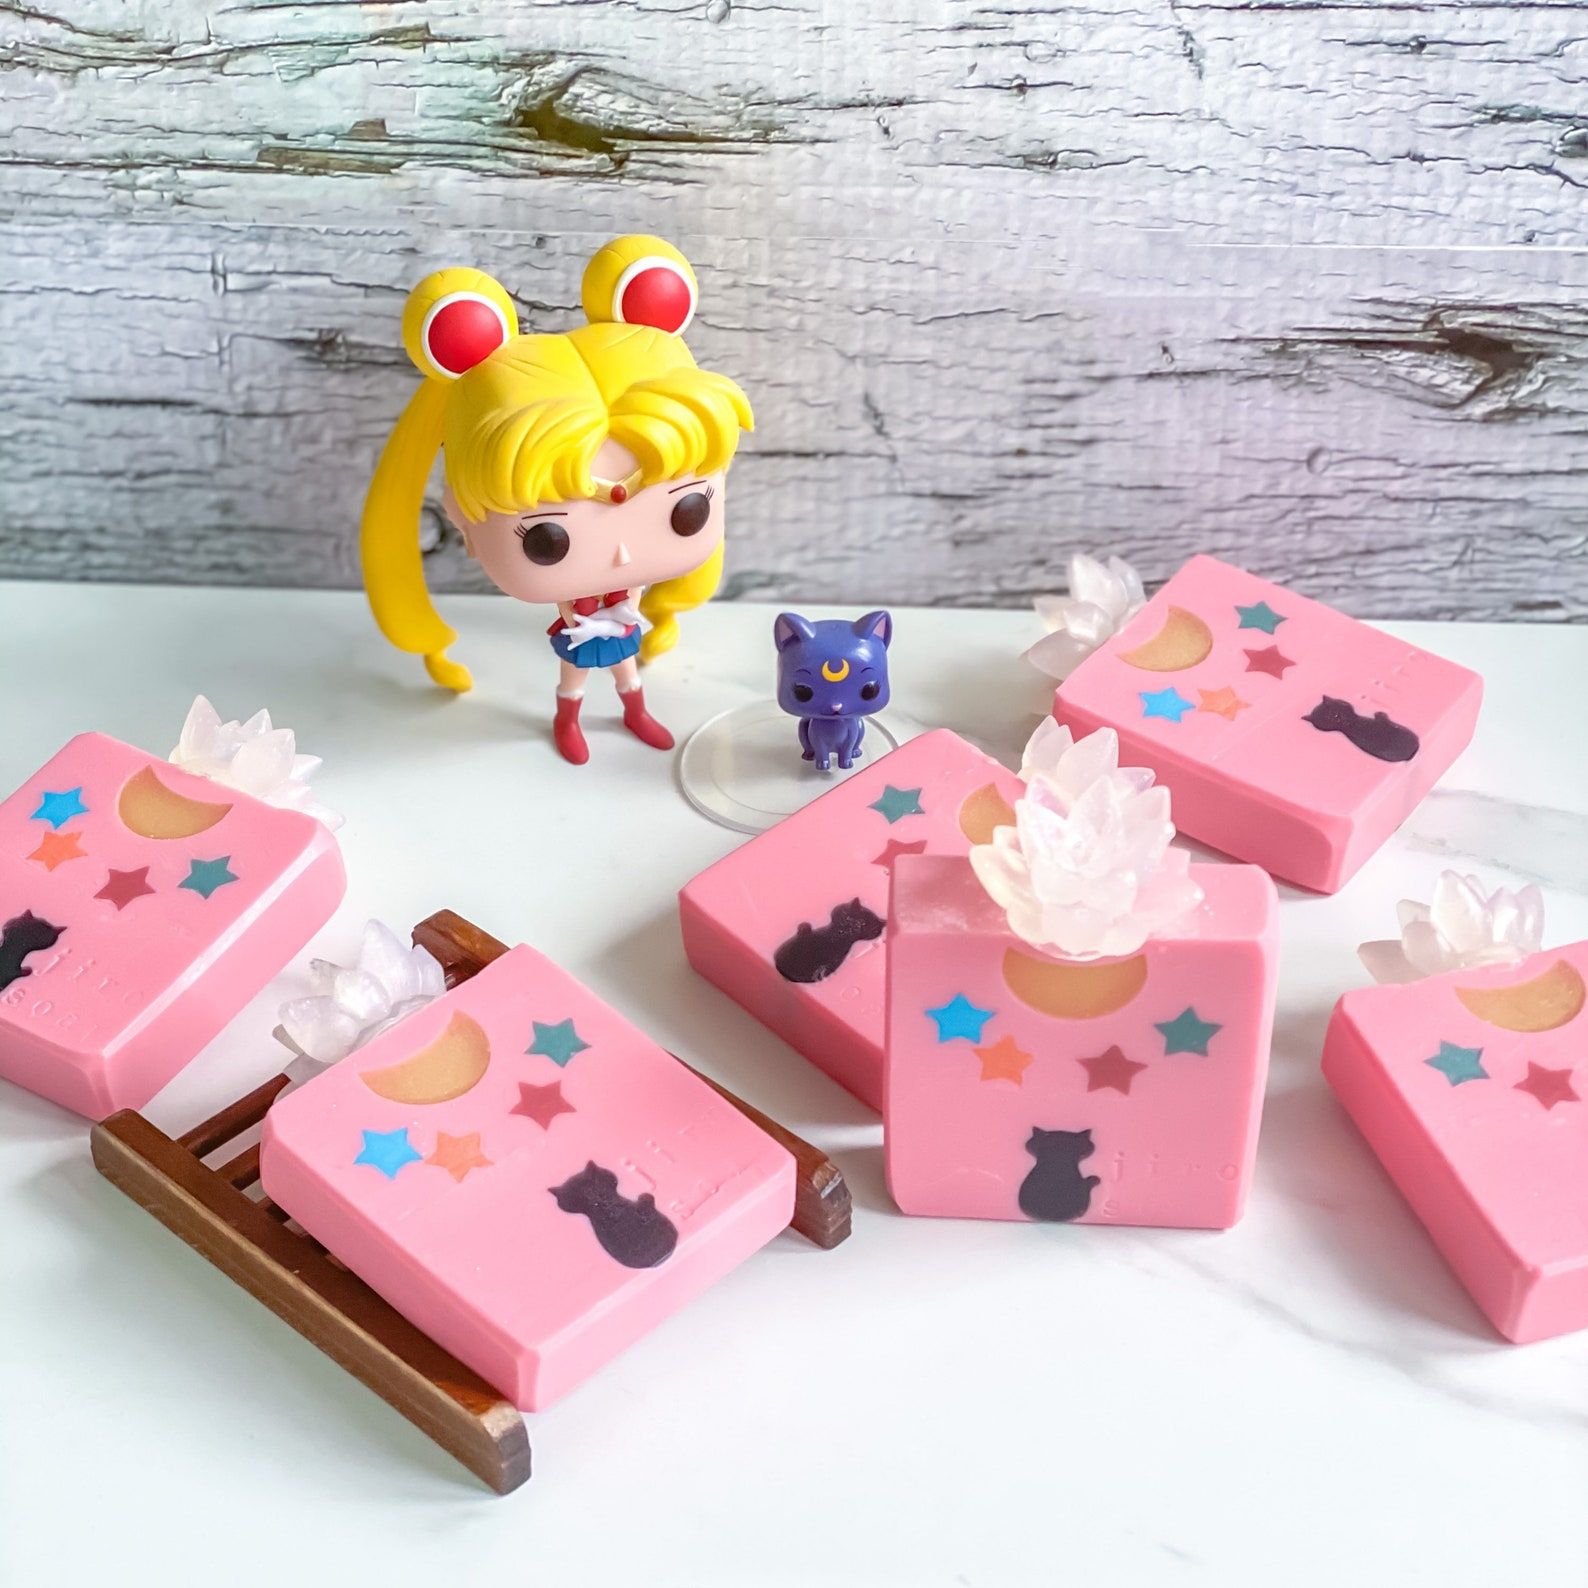 Sailor Moon Funk pop figurine net to six pink bars of vegan Sailor Moon themed soap